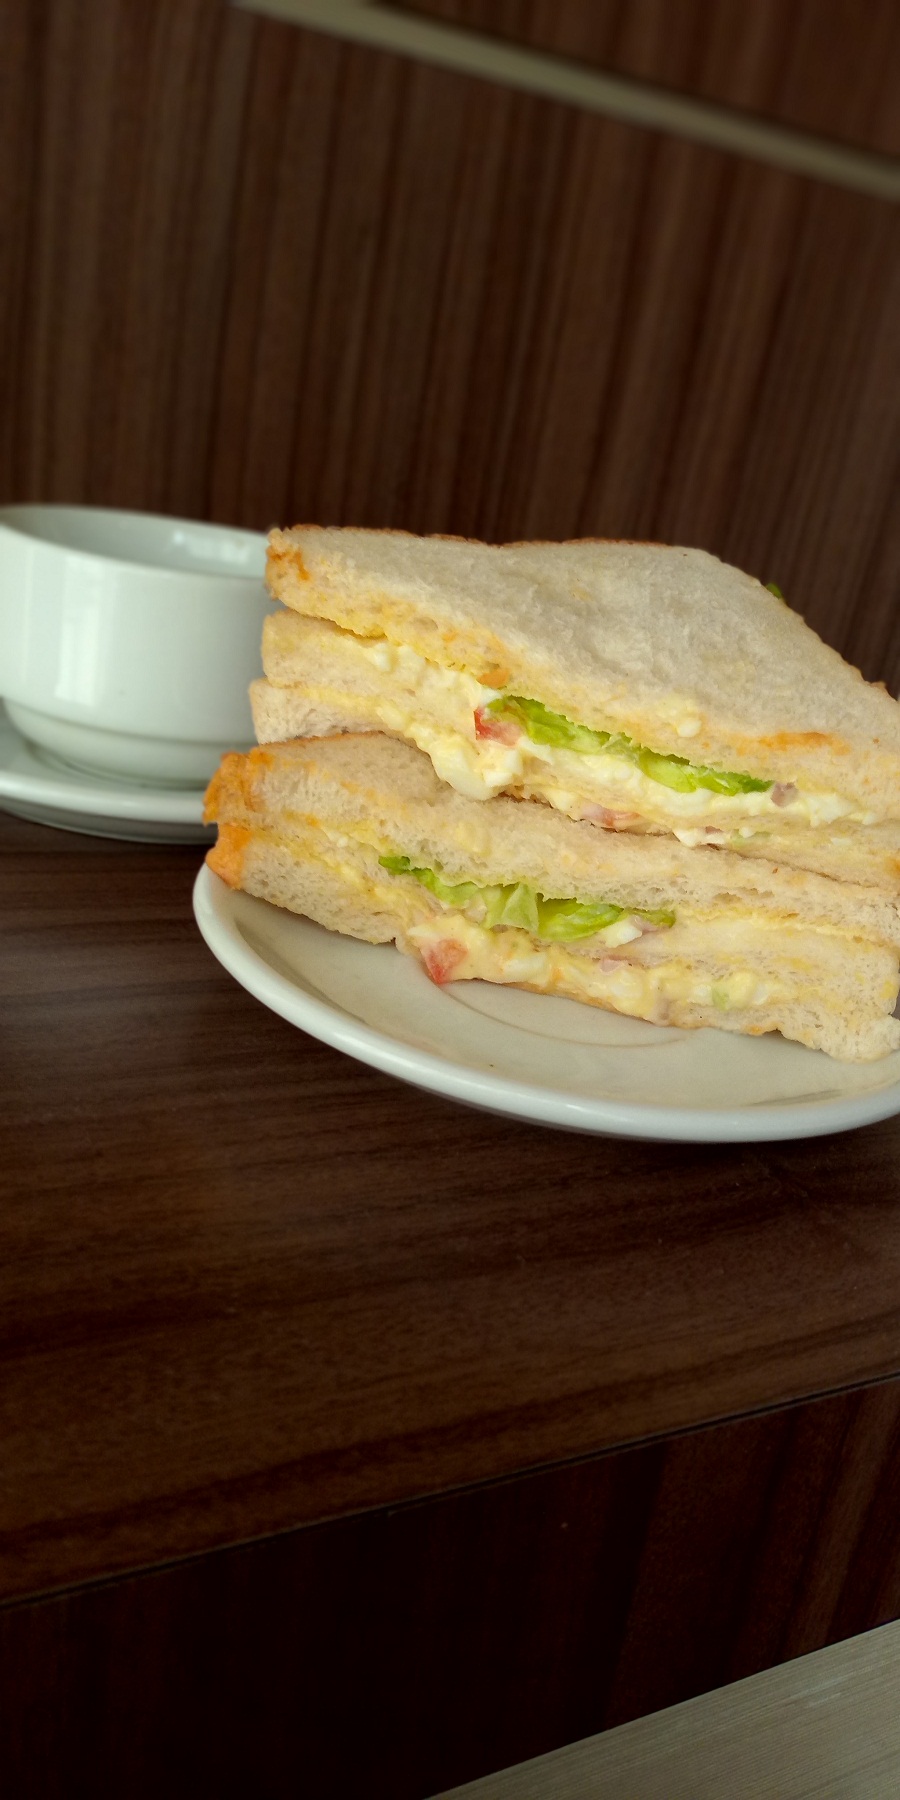 Koleksi 10 Resepi Sandwich Yang Sedap Dan Senang Disediakan 5